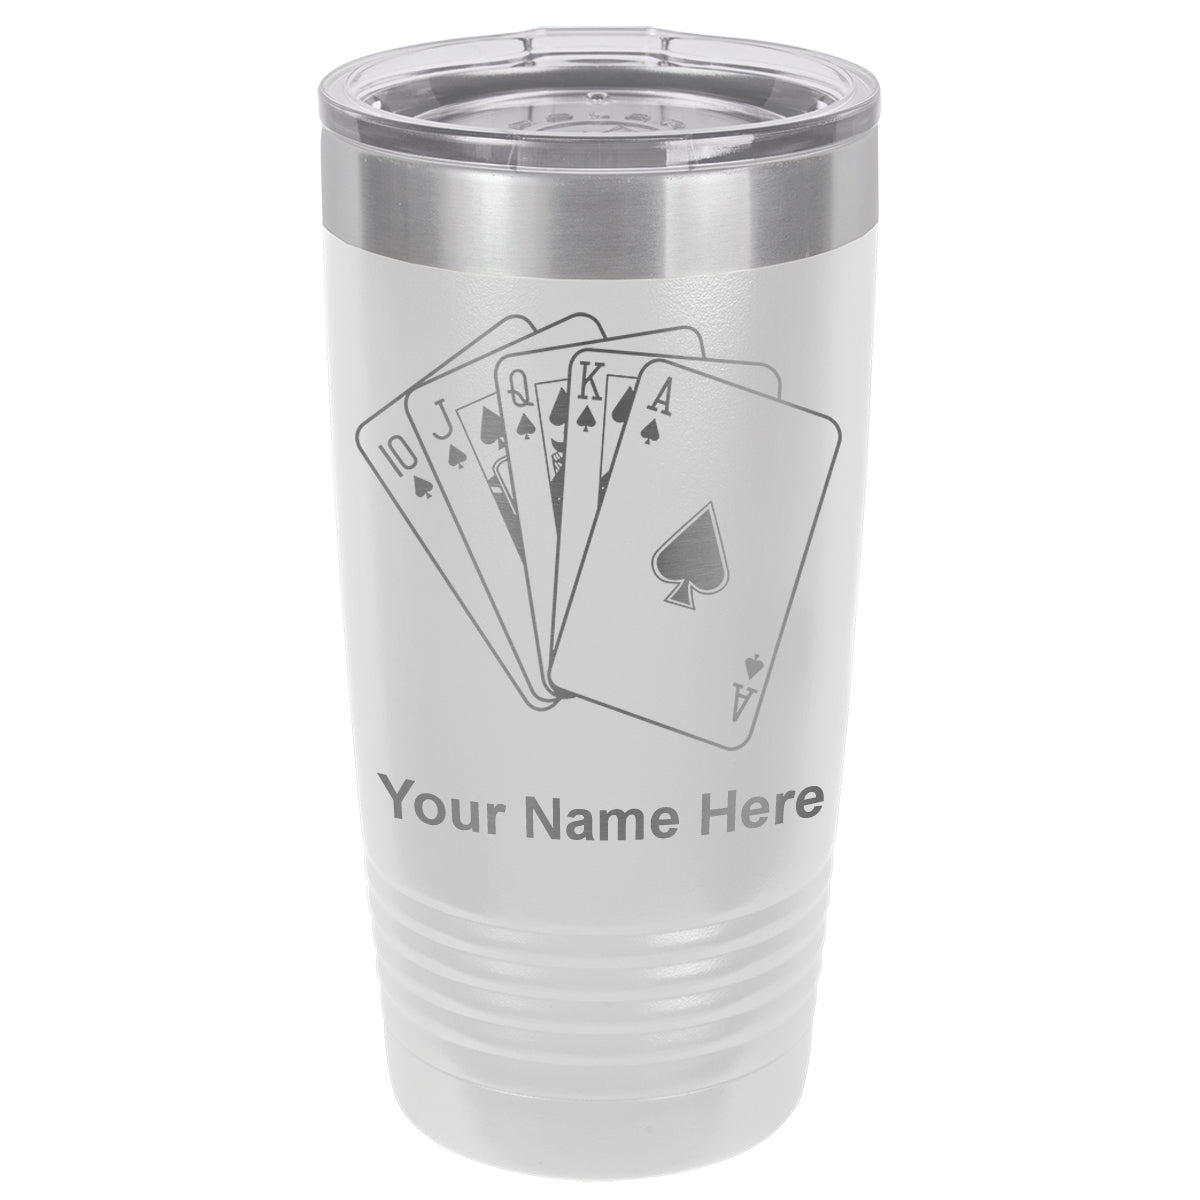 20oz Vacuum Insulated Tumbler Mug, Royal Flush Poker Cards, Personalized Engraving Included